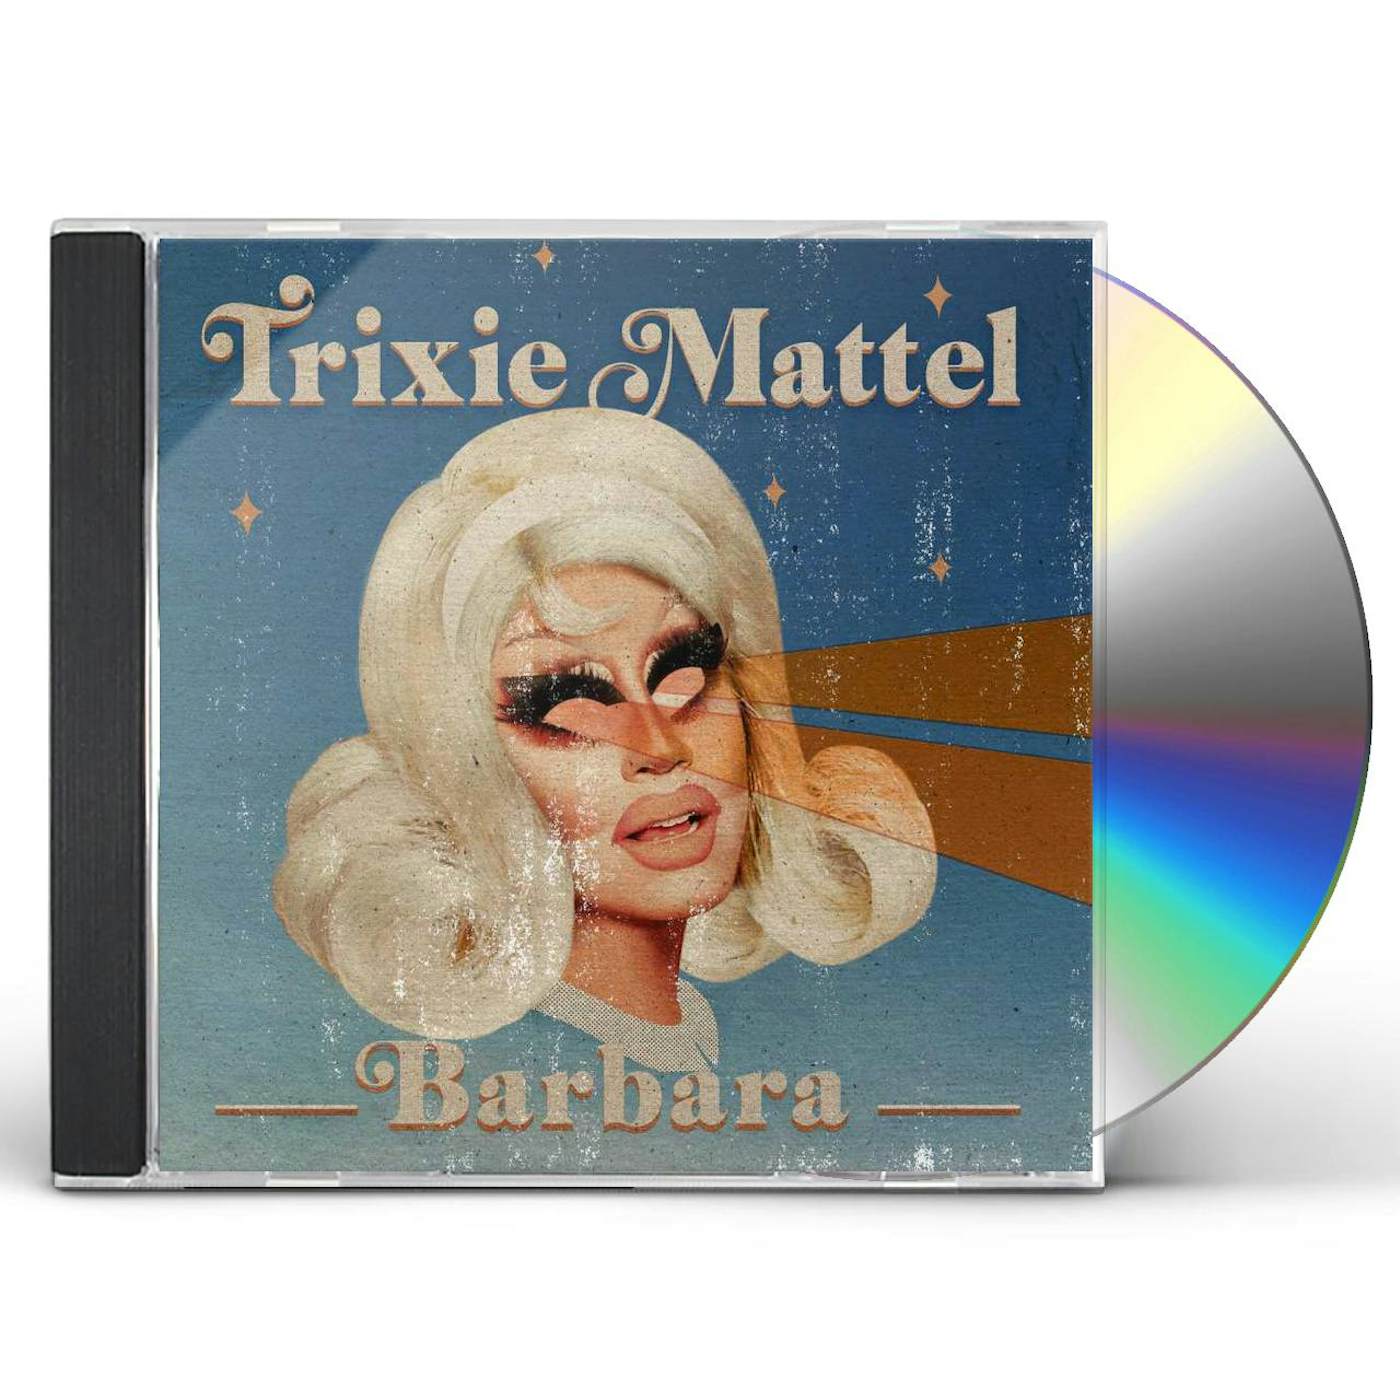 Trixie Mattel BARBARA CD